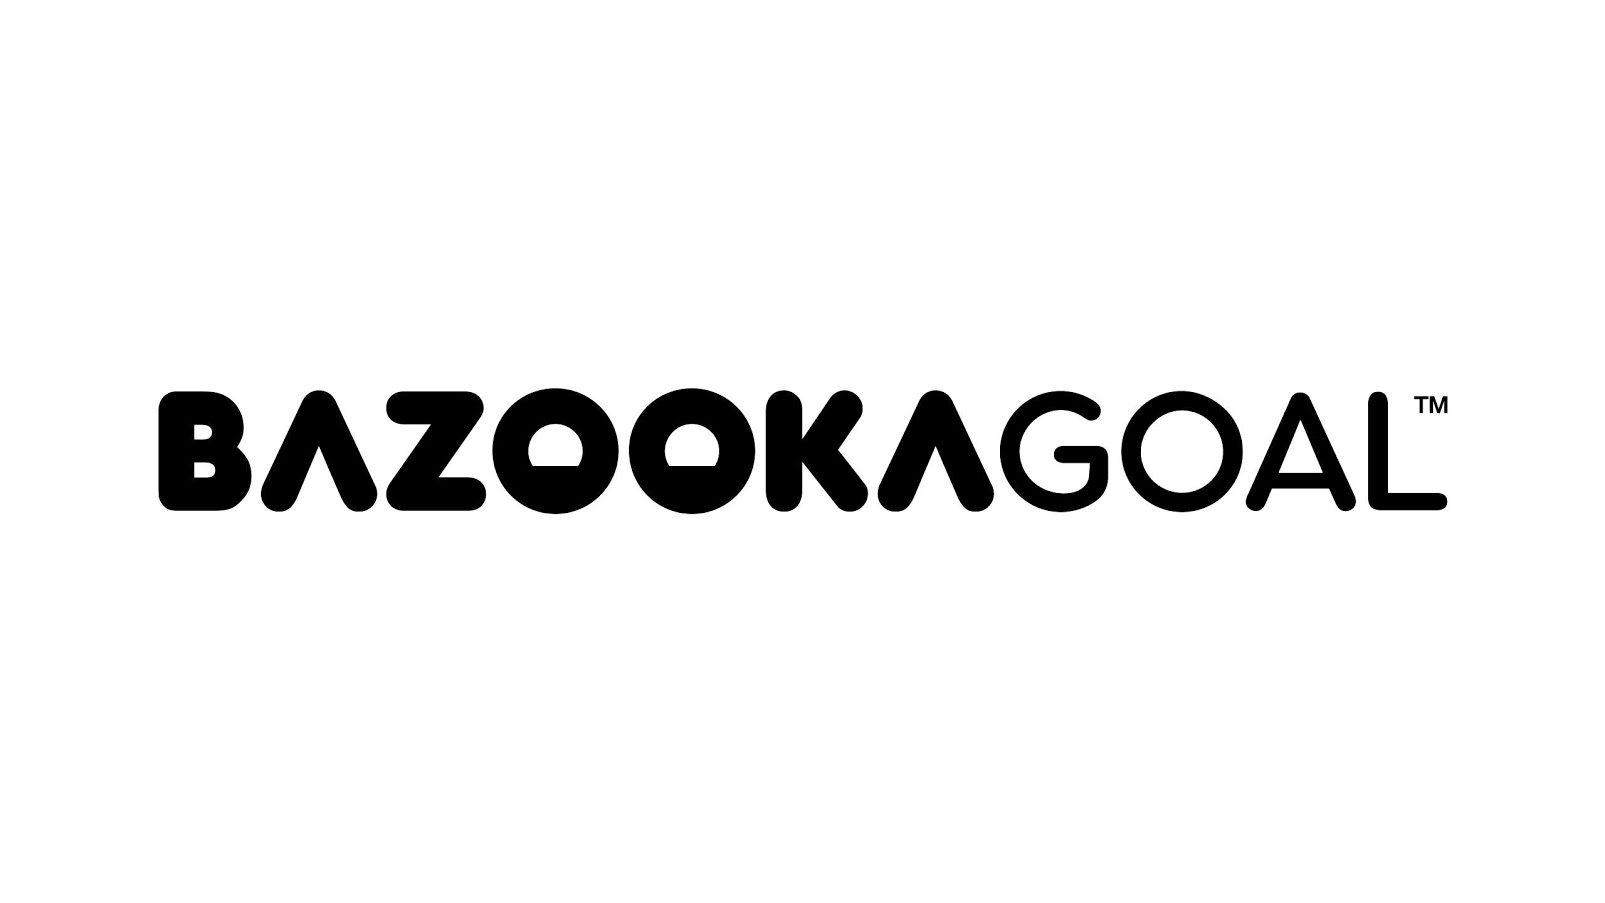 Bazookagoal